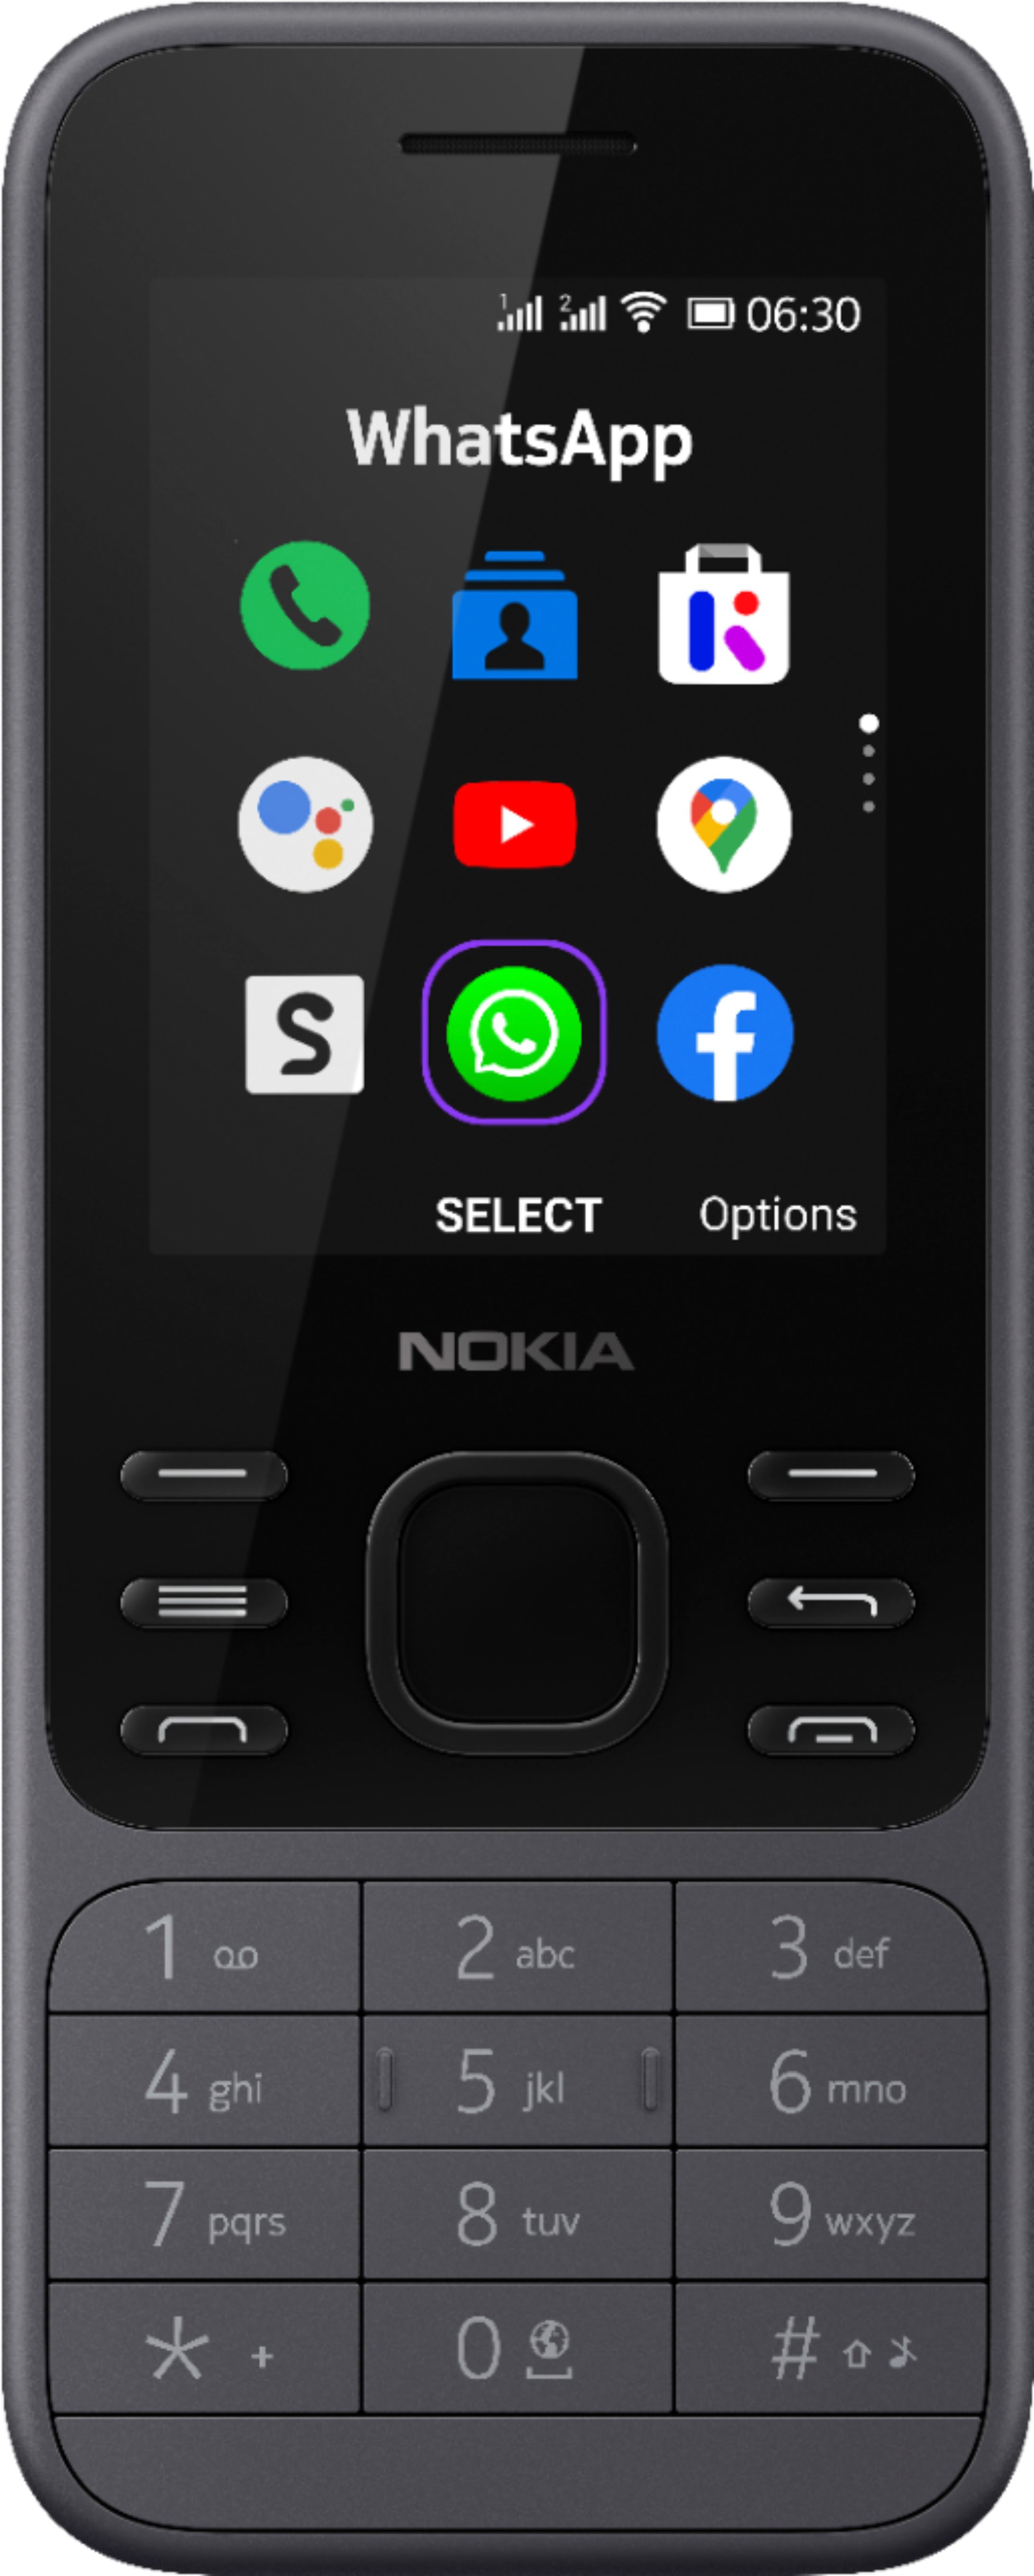 Nokia 6300 4G, Nokia 8000 4G key specifications tipped, KaiOS to power them